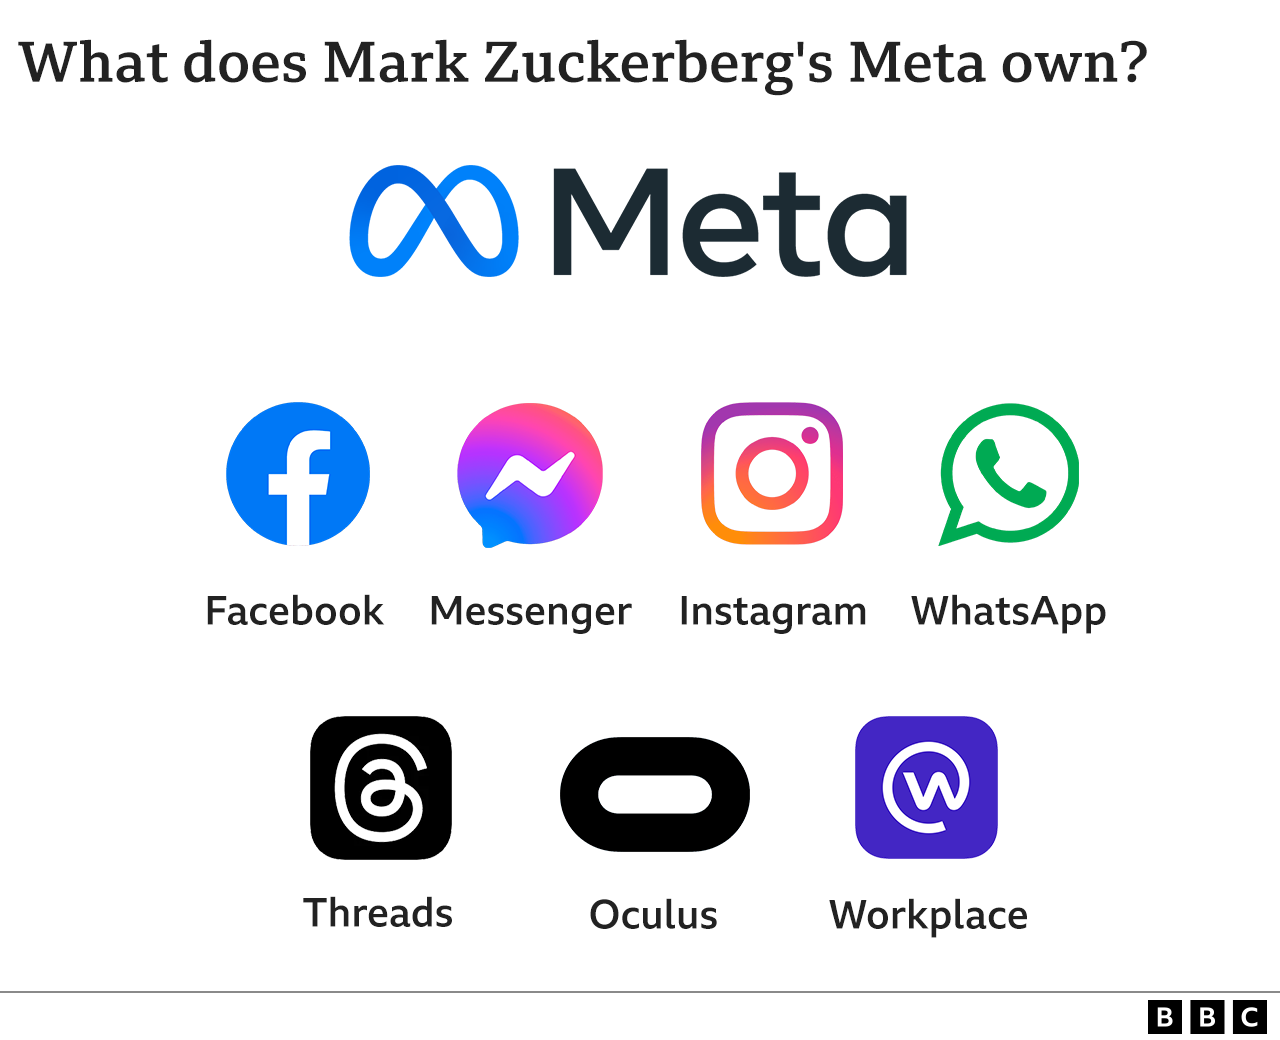 Graphic showing that Mark Zuckerberg's Meta also owns Facebook, Messenger, Instagram, Whatsapp, Threads, Oculus and Workplace